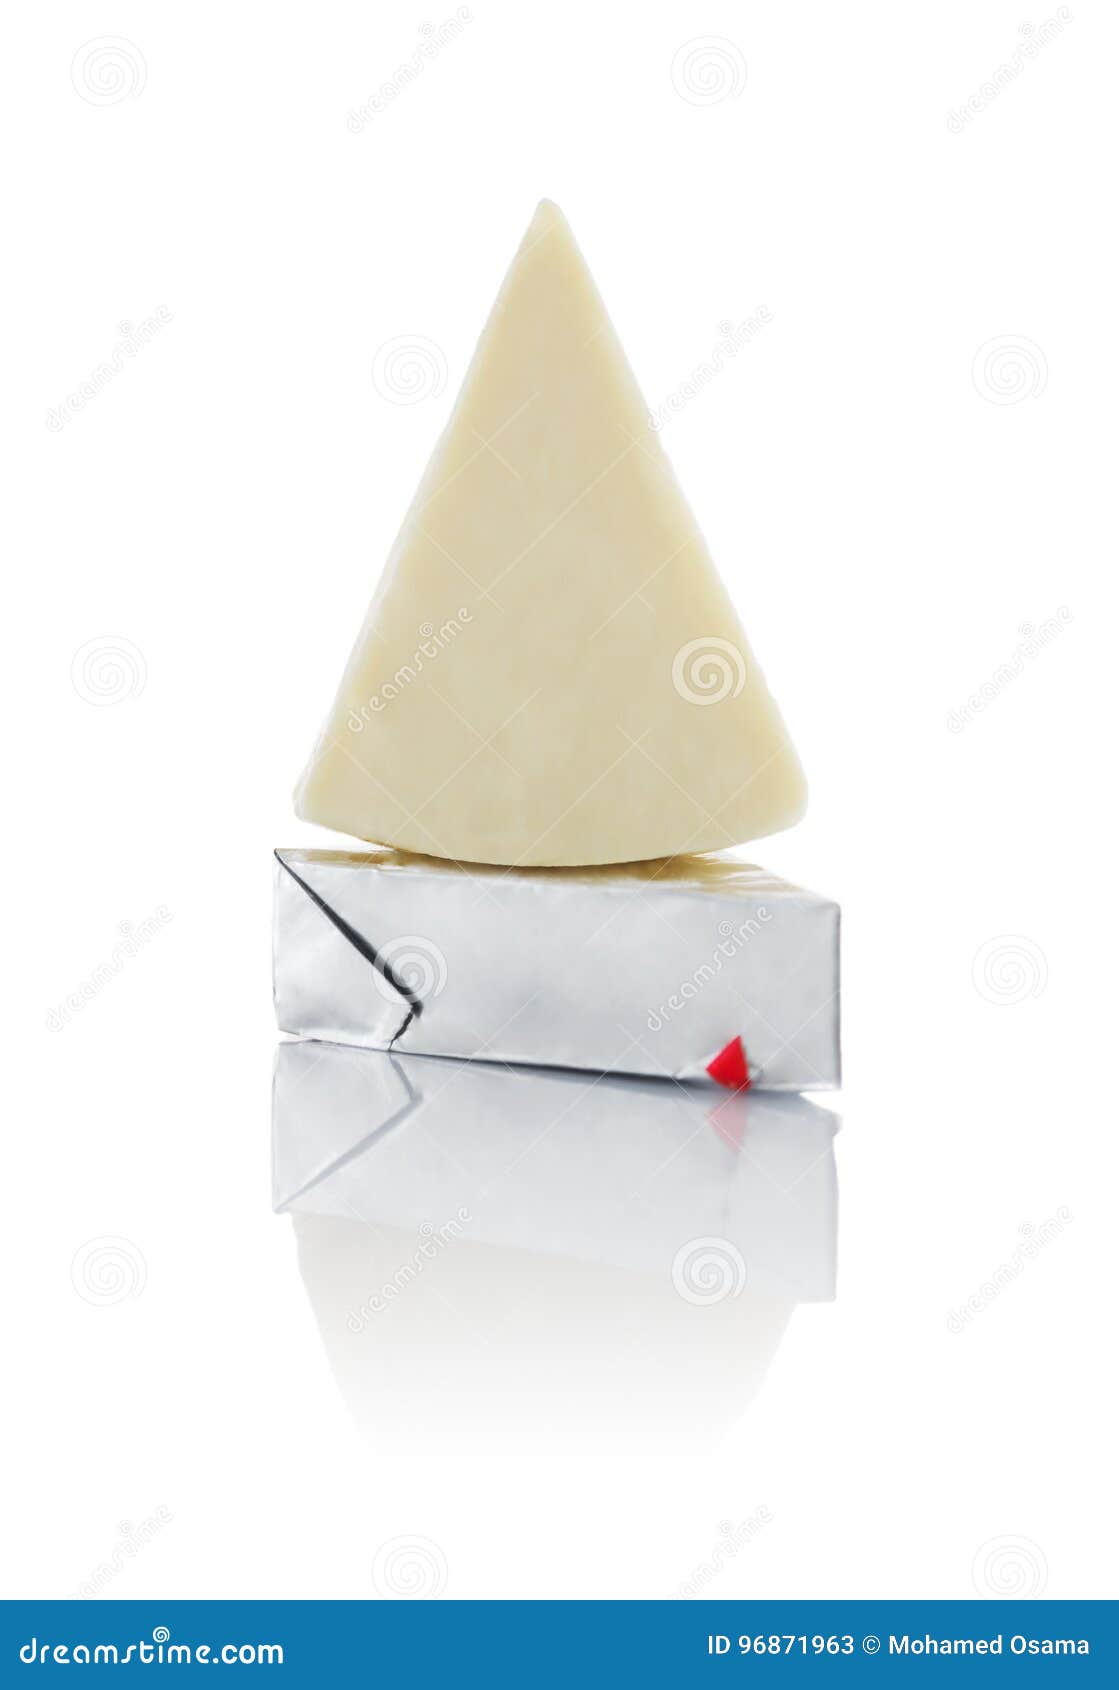 triangular processed cheese